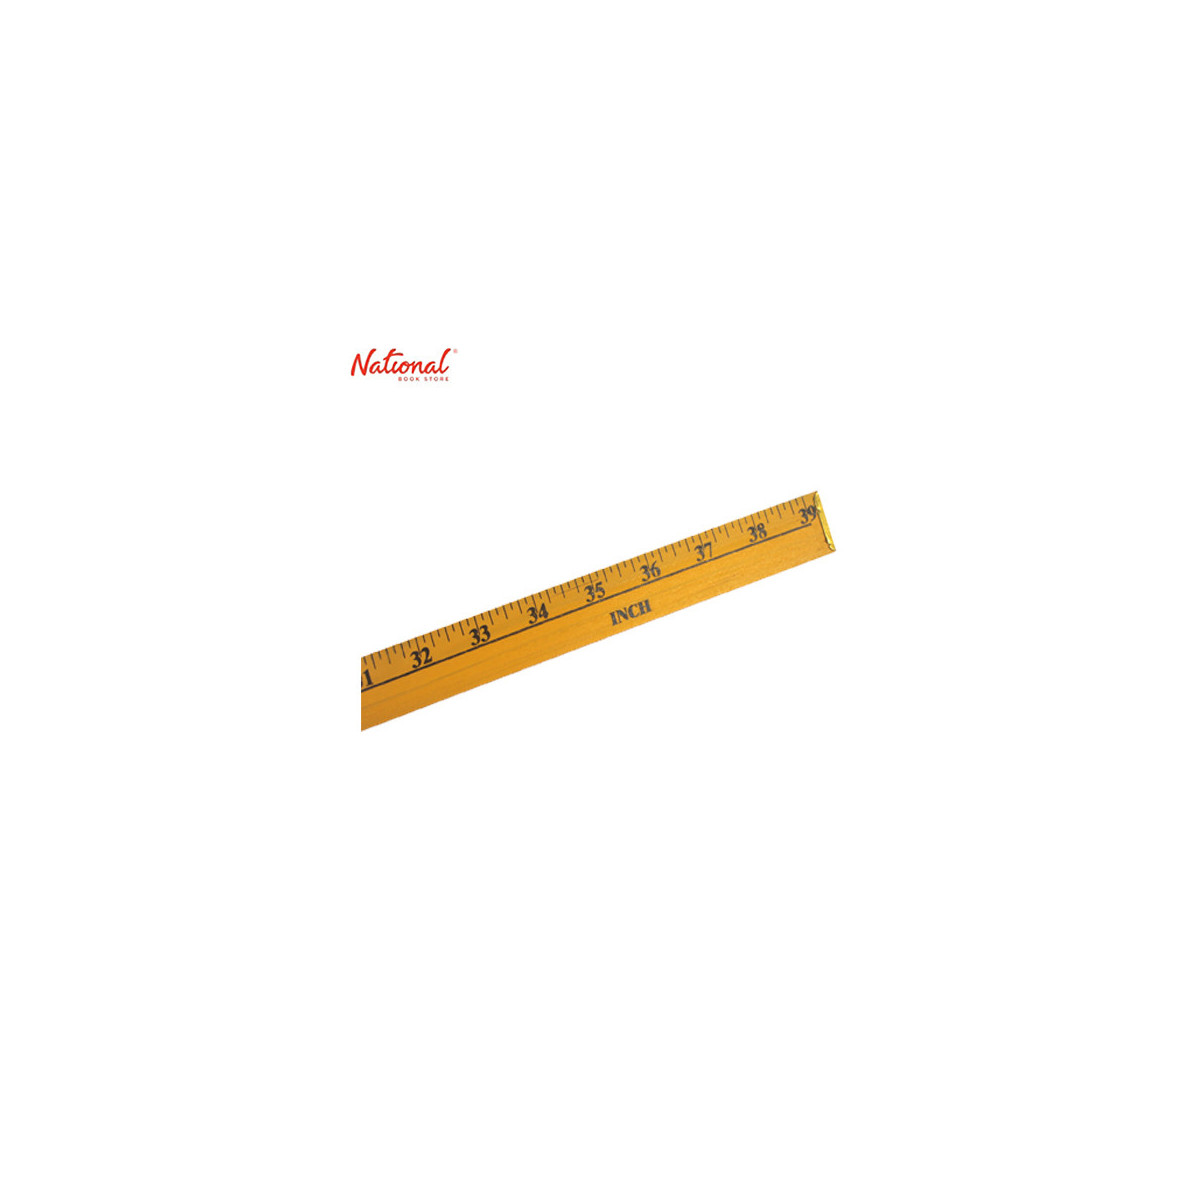 Meter Stick, 100 cm, Full Wood Meter Stick